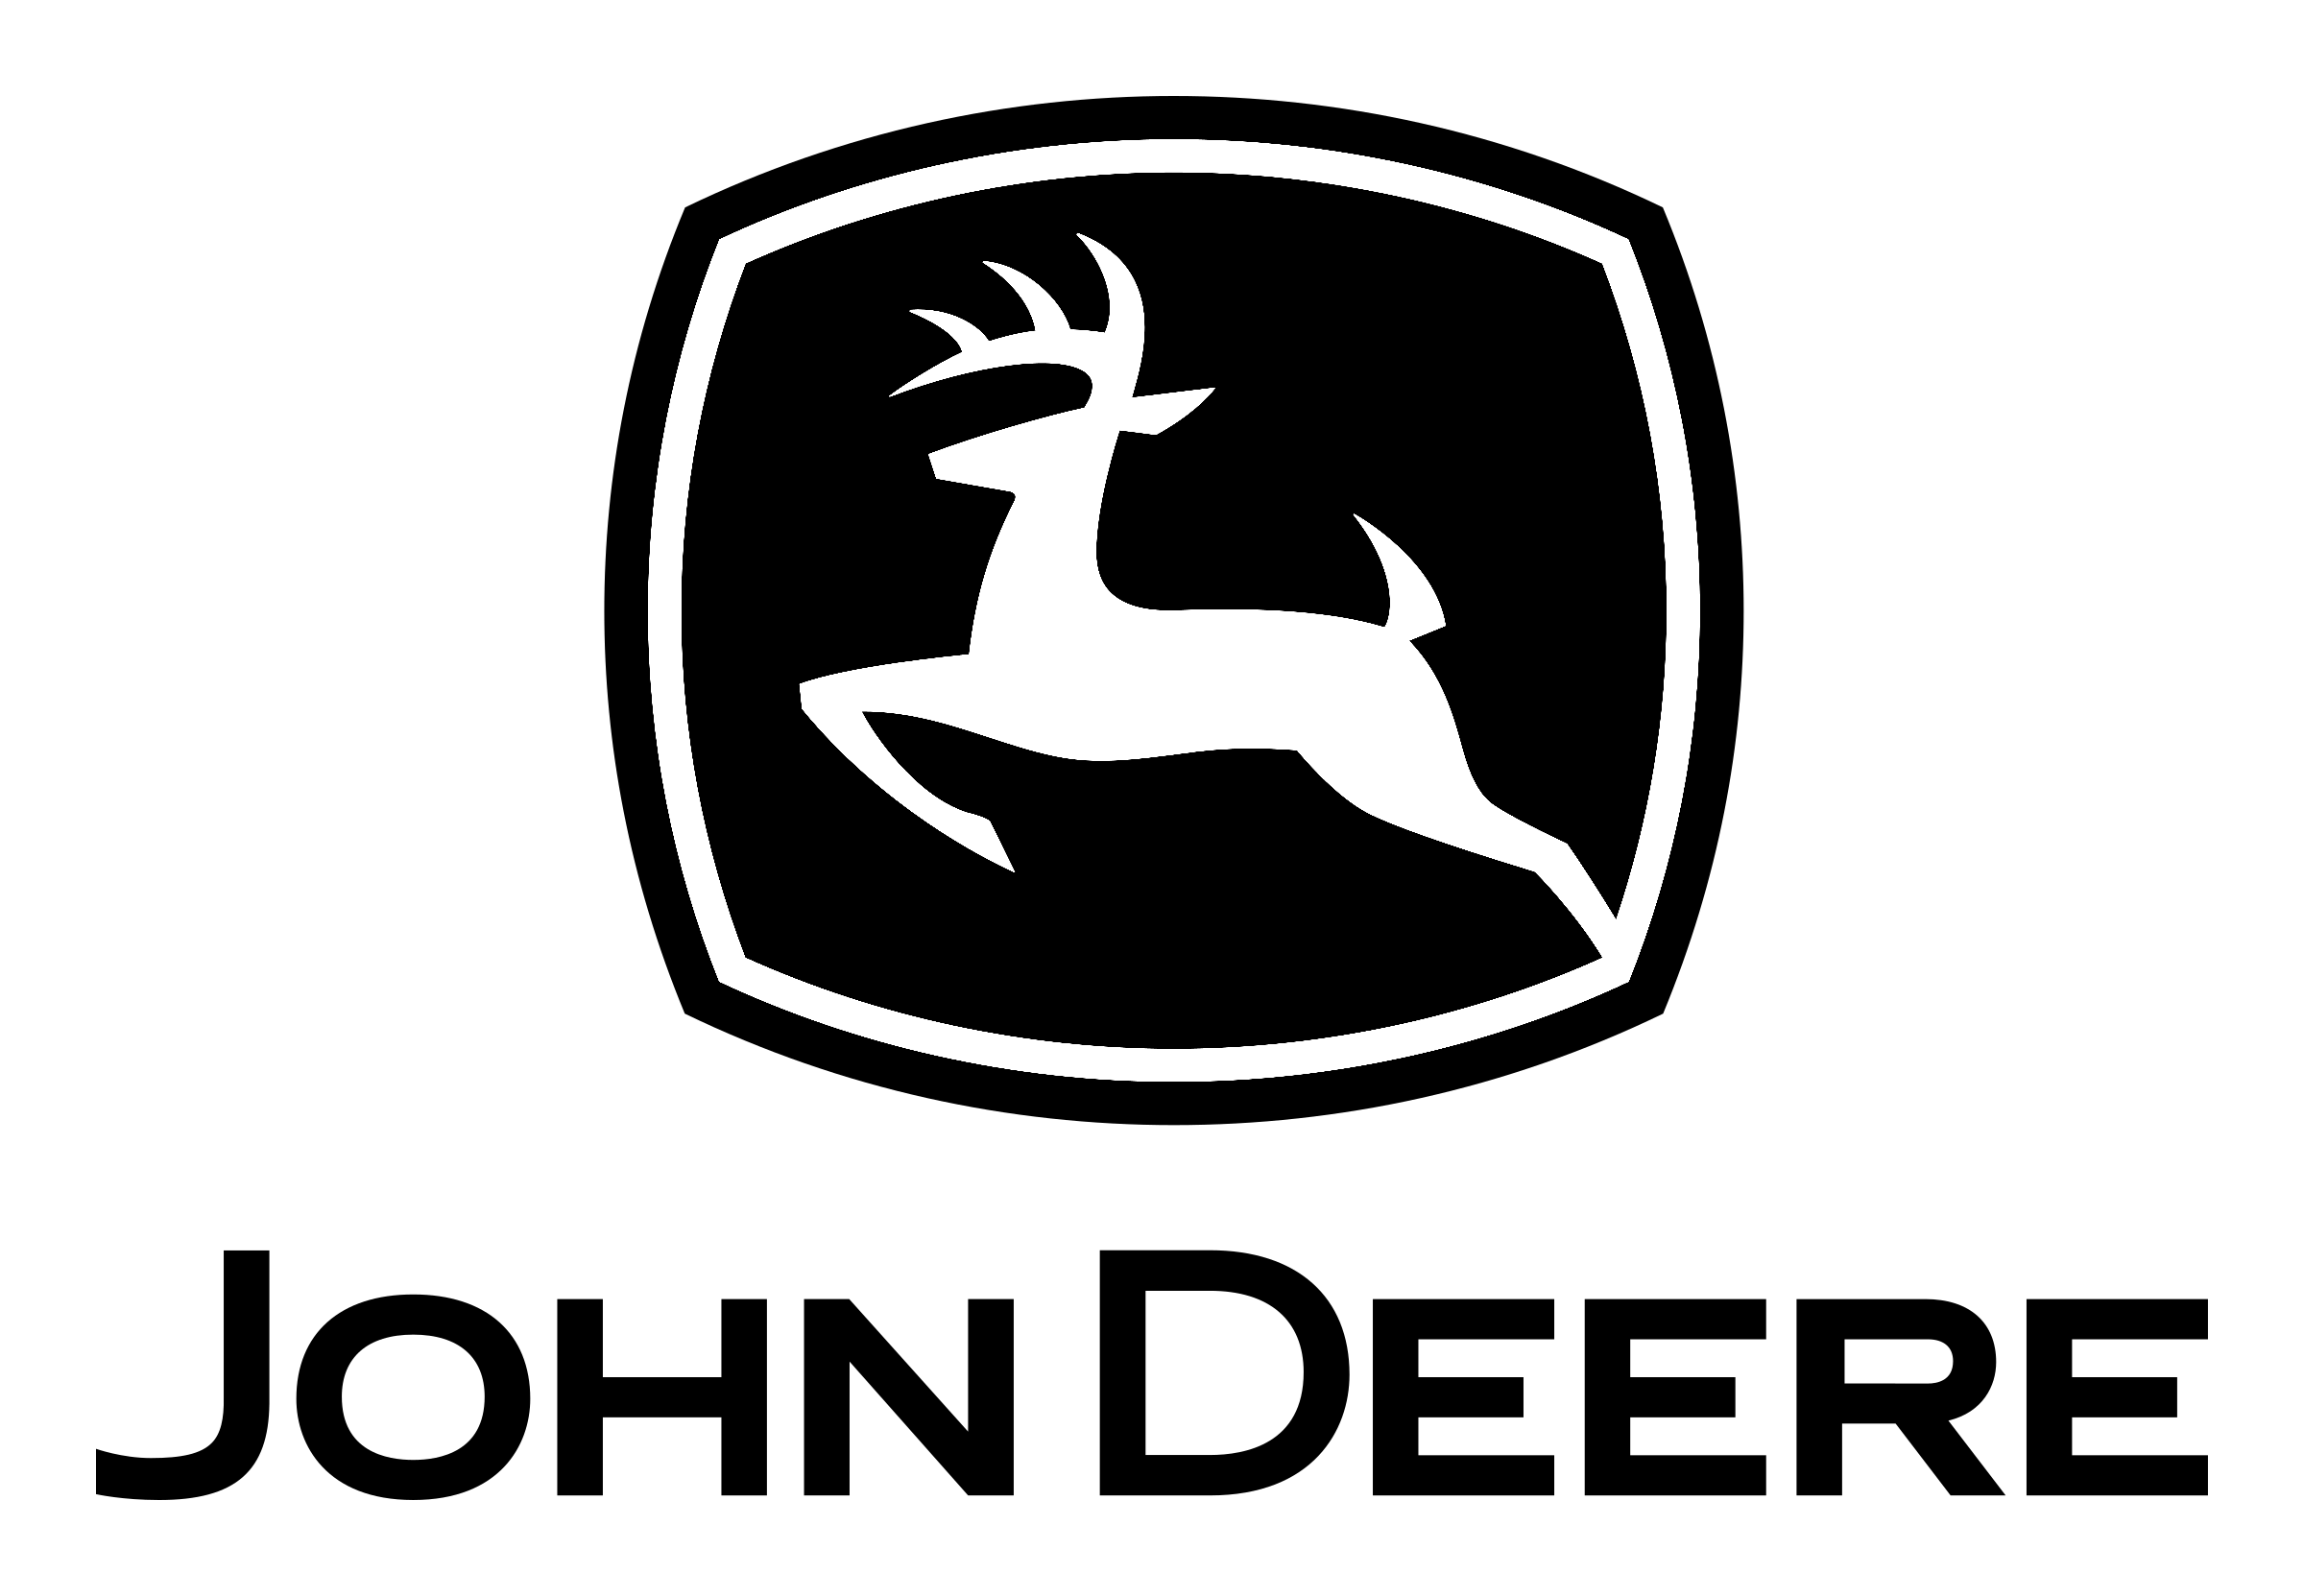 2018 John Deere Logo - Best Free John Deere Logo Vectors Photos Images